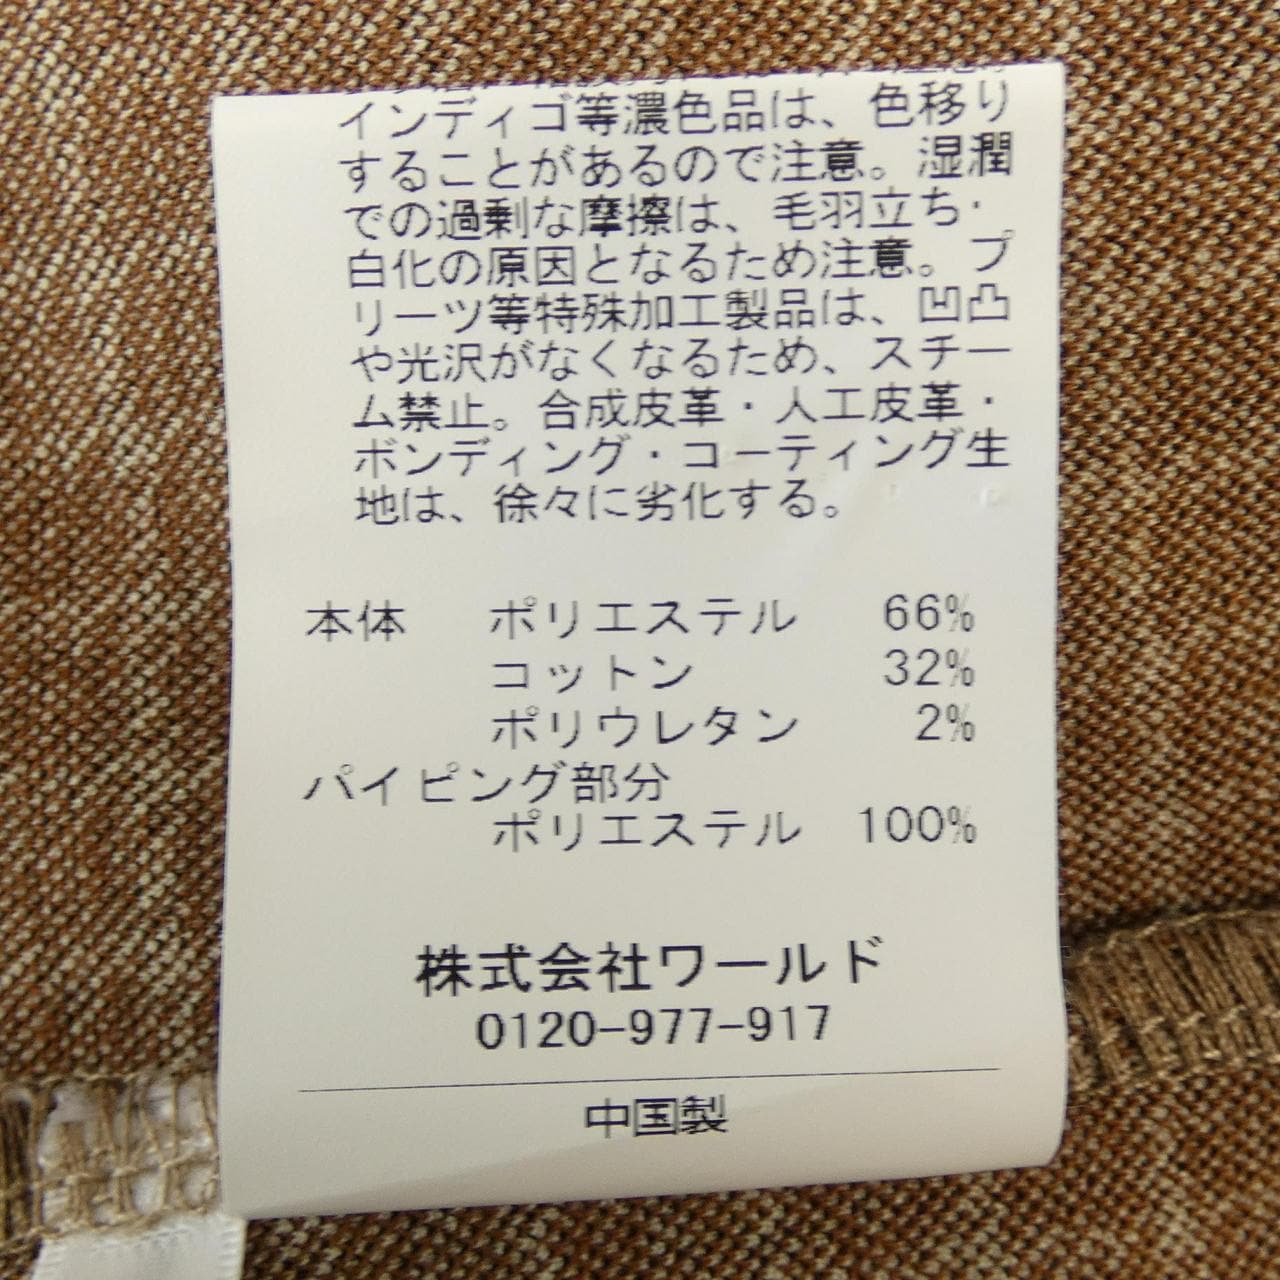 TAKEO KIKUCHI jacket